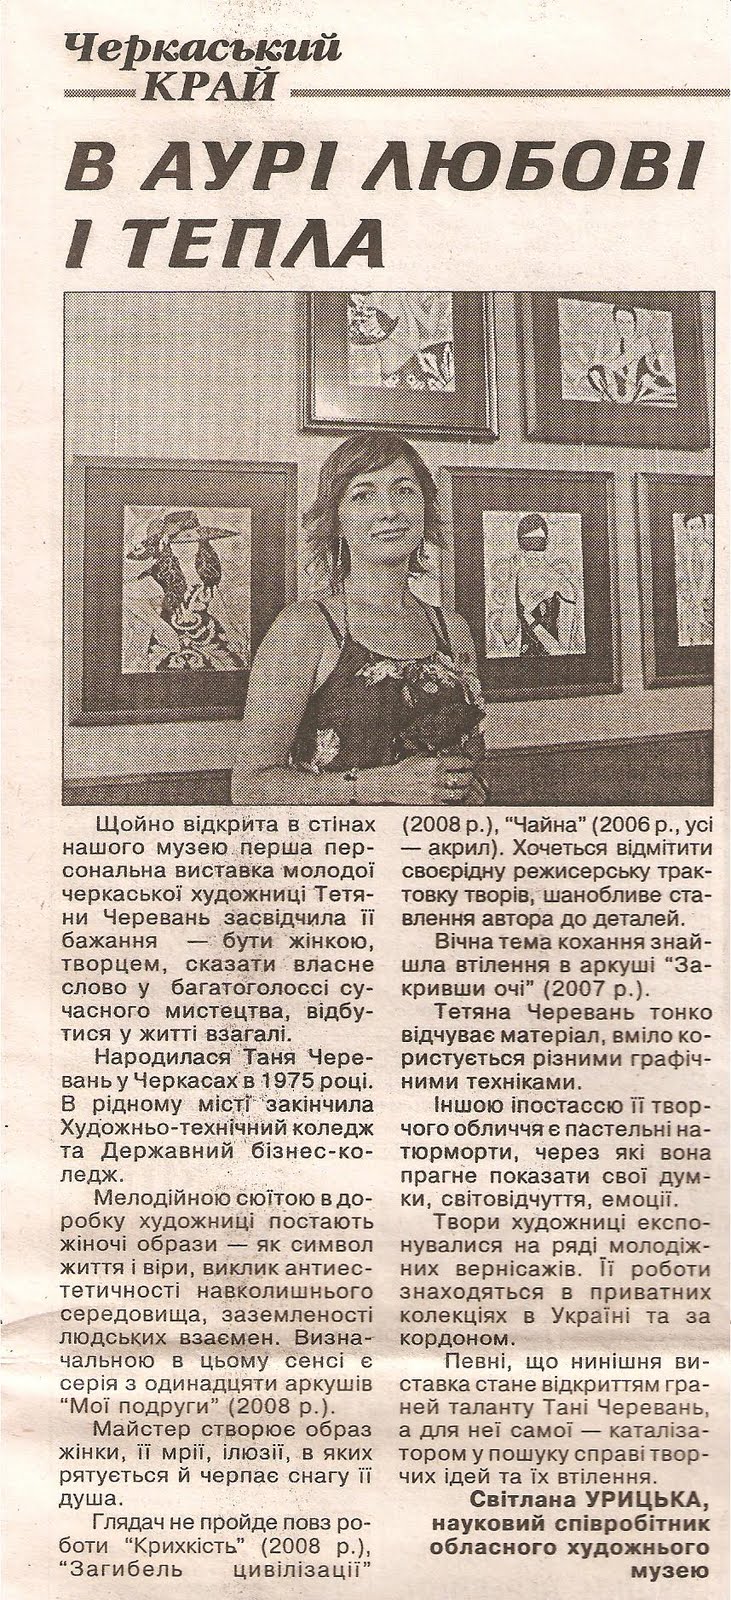 Newspaper "Cherkasy Krai"